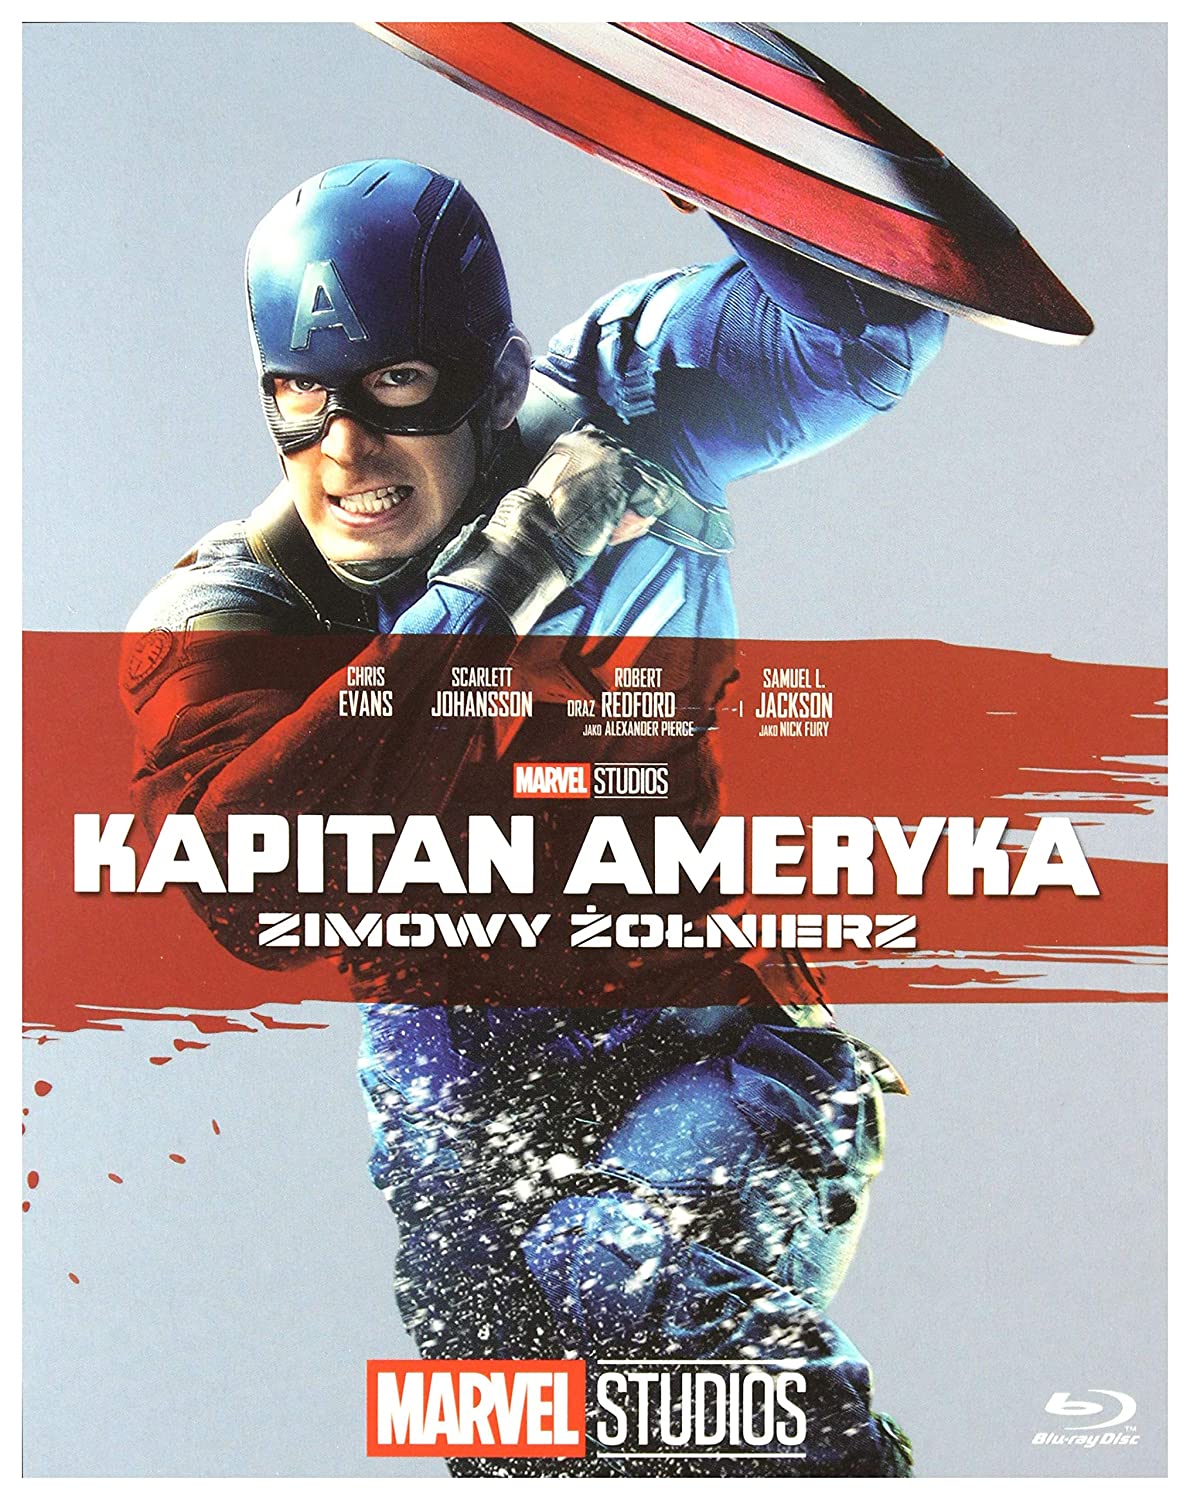 captain america the winter soldier subtitle indonesia